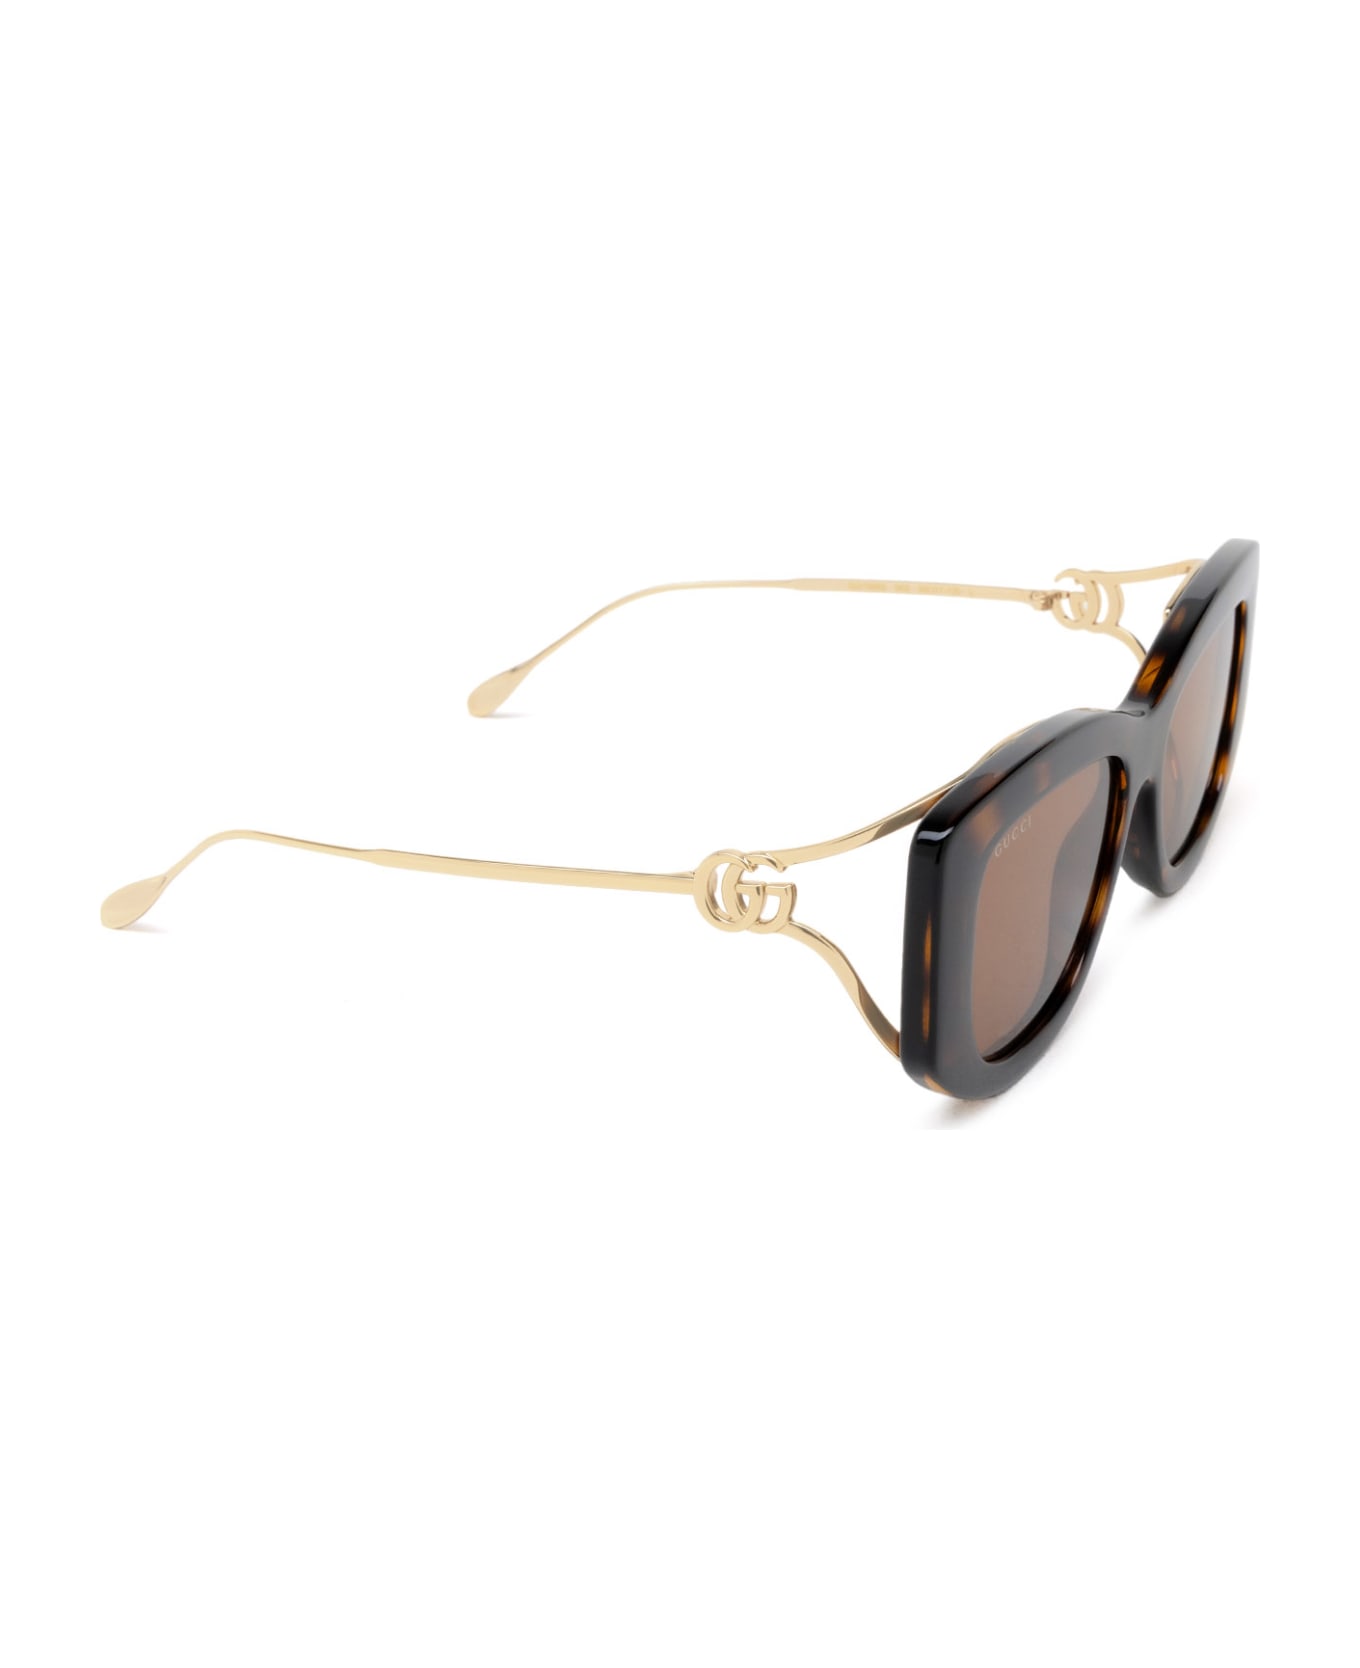 Gucci Eyewear Gg1566s Havana Sunglasses - Havana